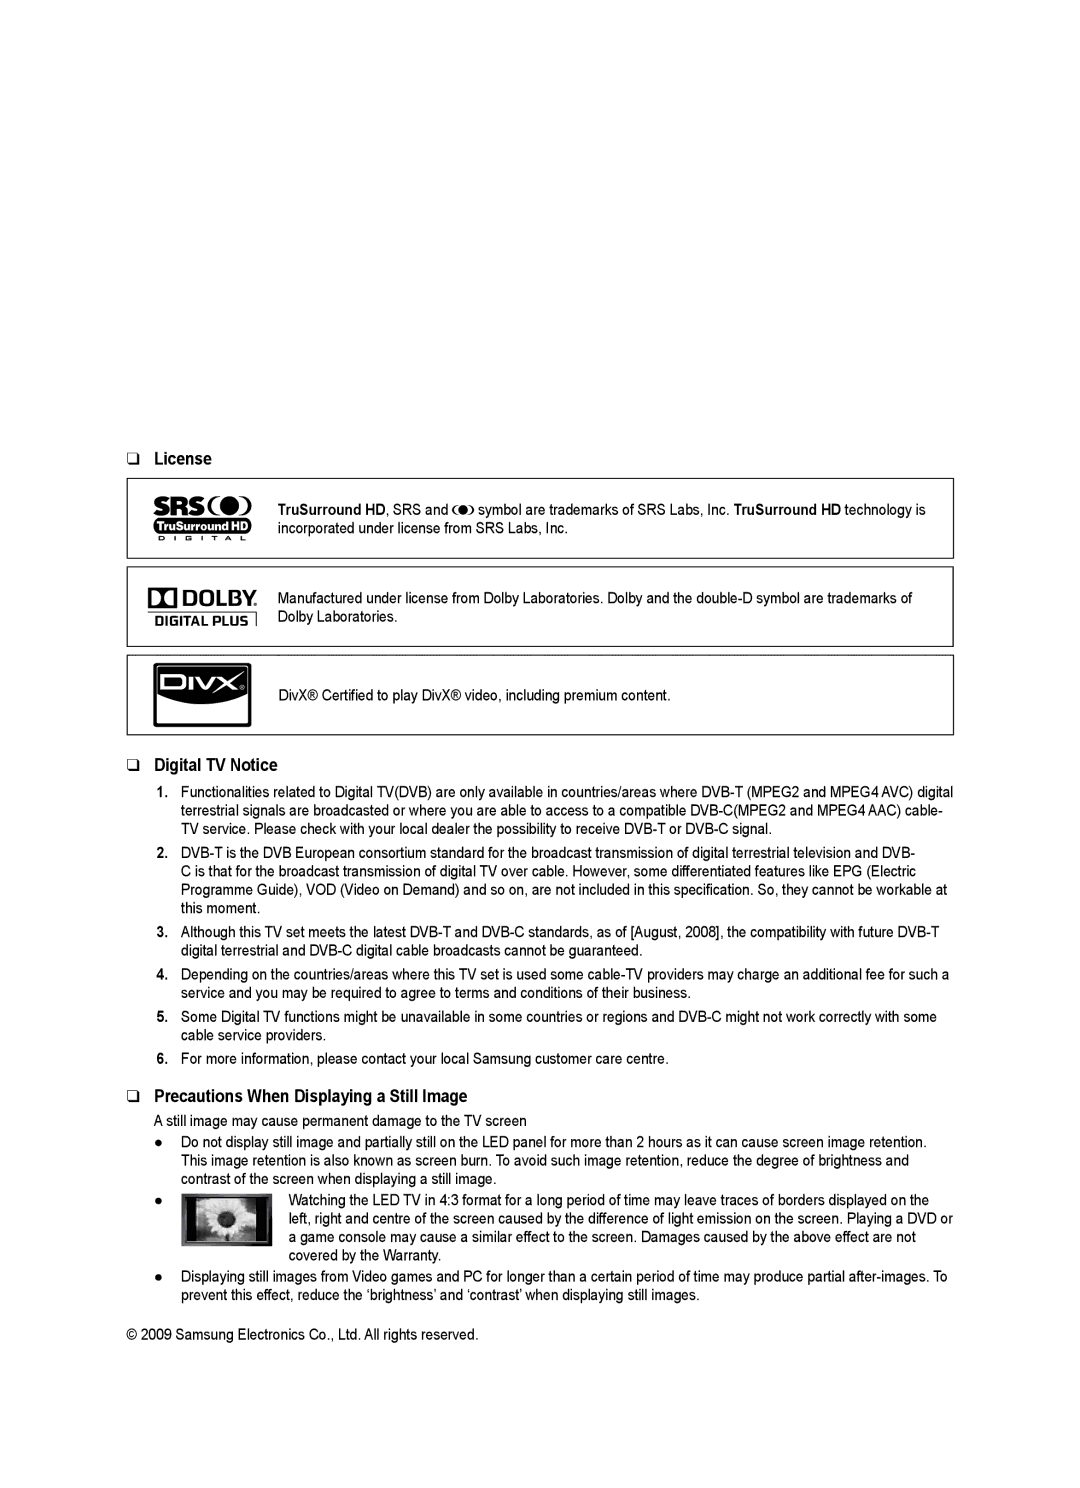 Samsung UE40B7020WWXXN, UE40B7020WWXUA manual License, Digital TV Notice, Precautions When Displaying a Still Image 